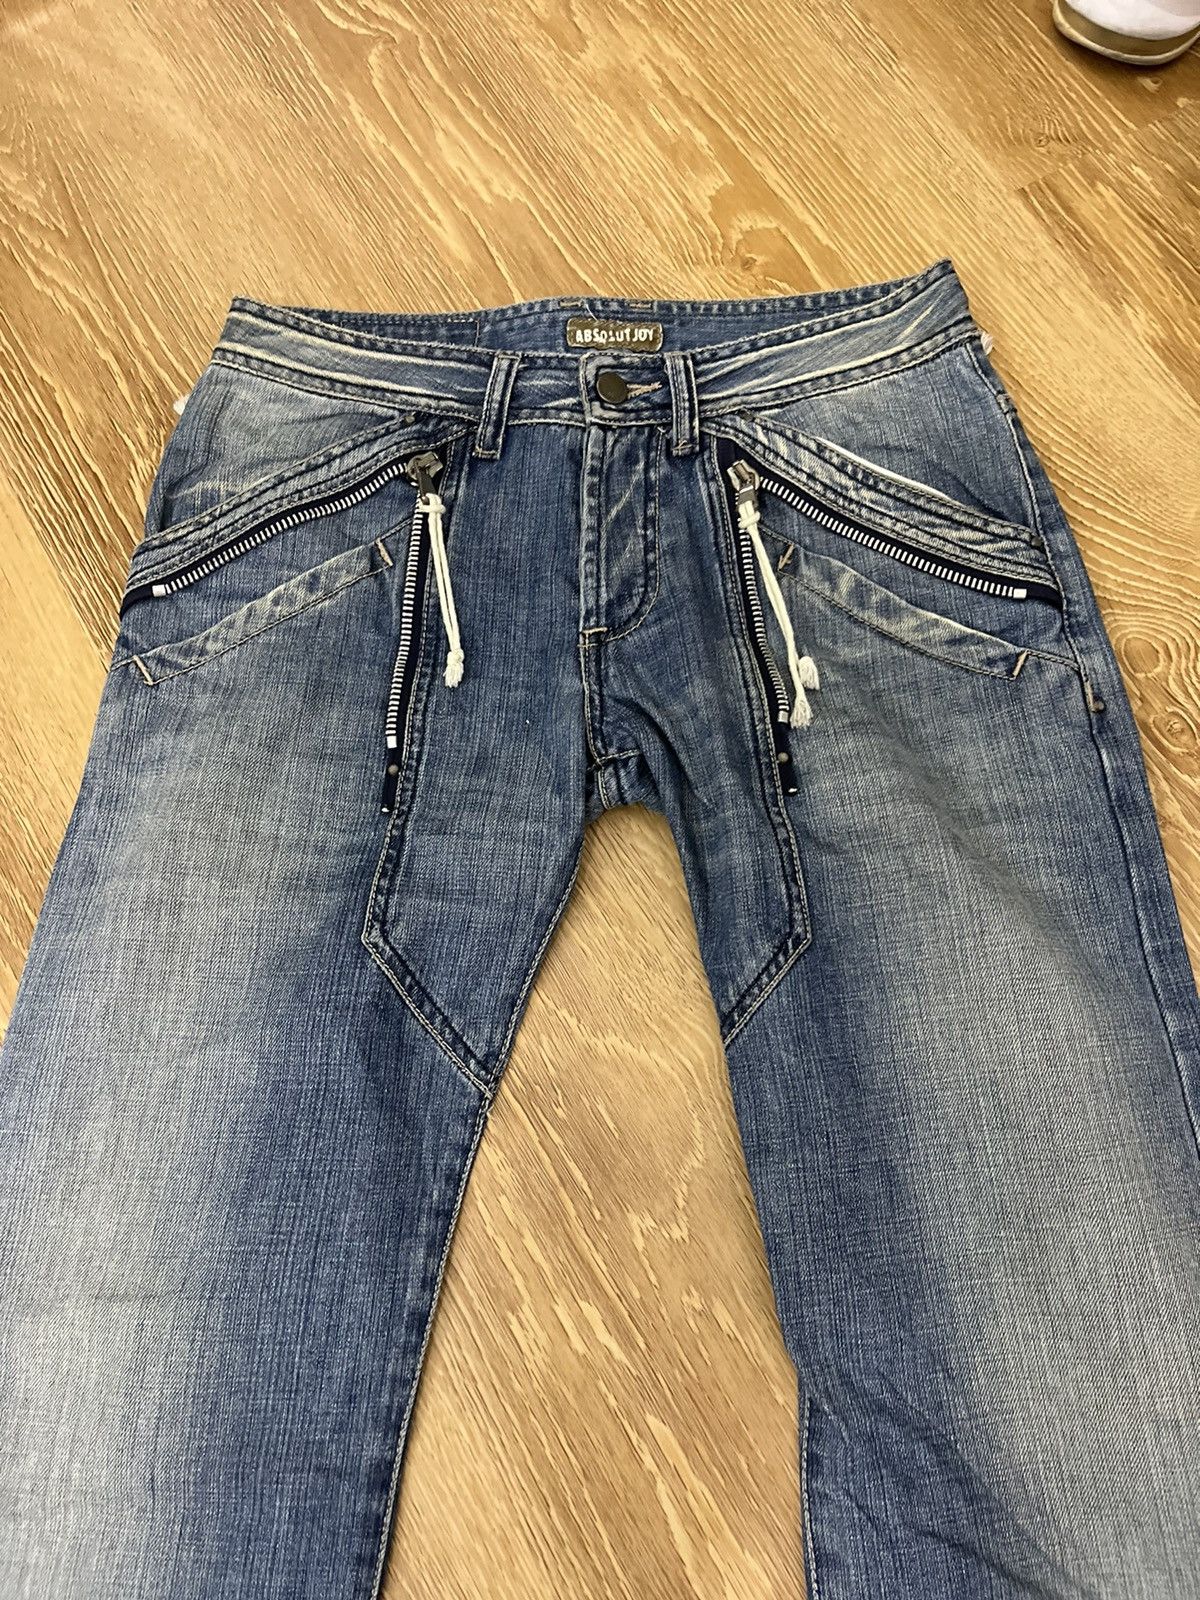 Vintage Special Design 🔥 Absolute Joy Japanese Brand Denime Pants Size US 29 - 14 Thumbnail